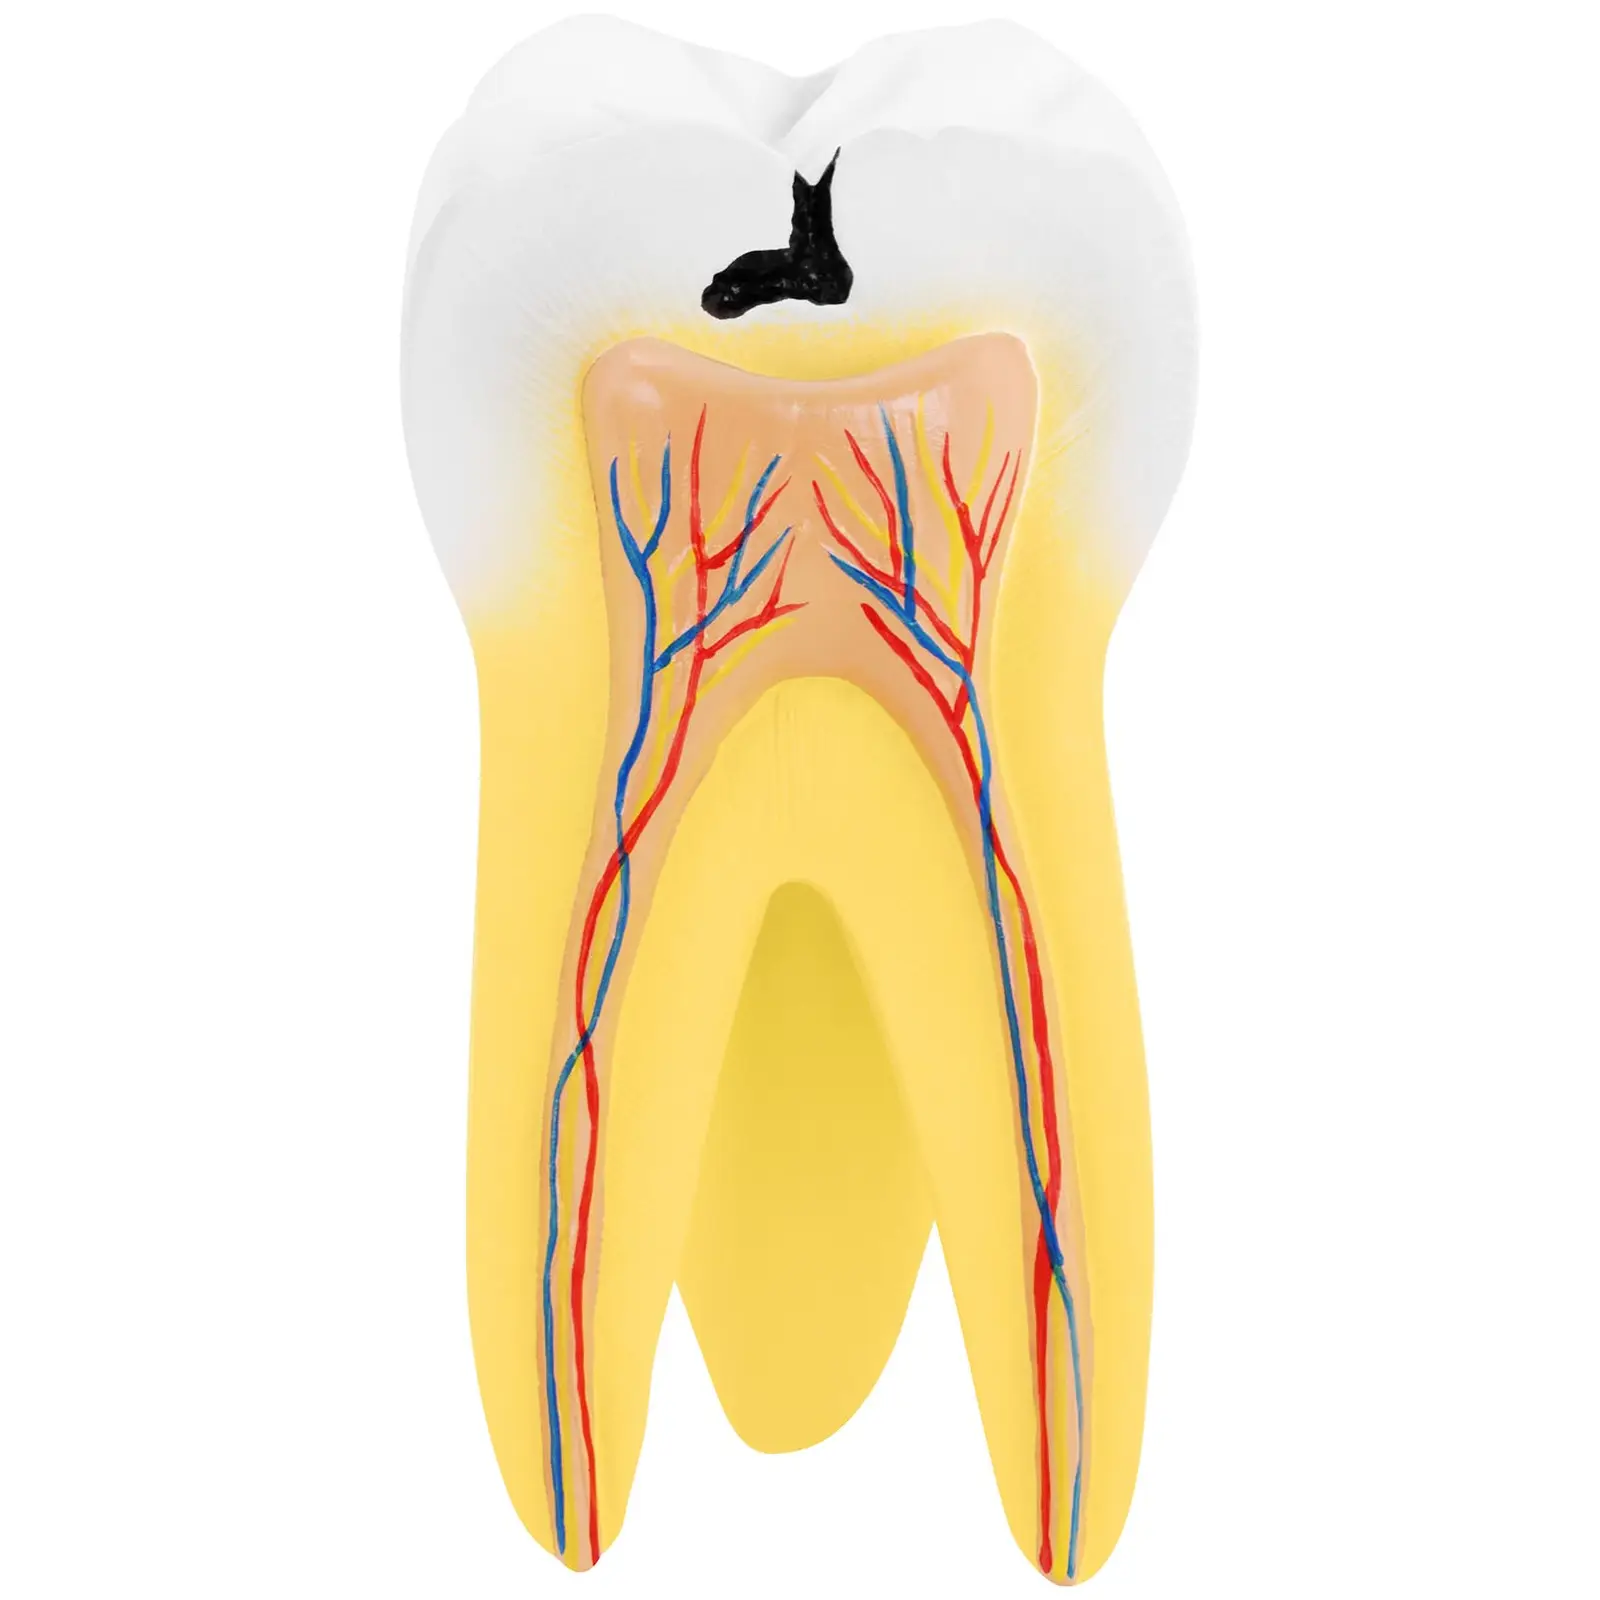 Zahnmodell - zweiwurzeliger Backenzahn - 2-teilig